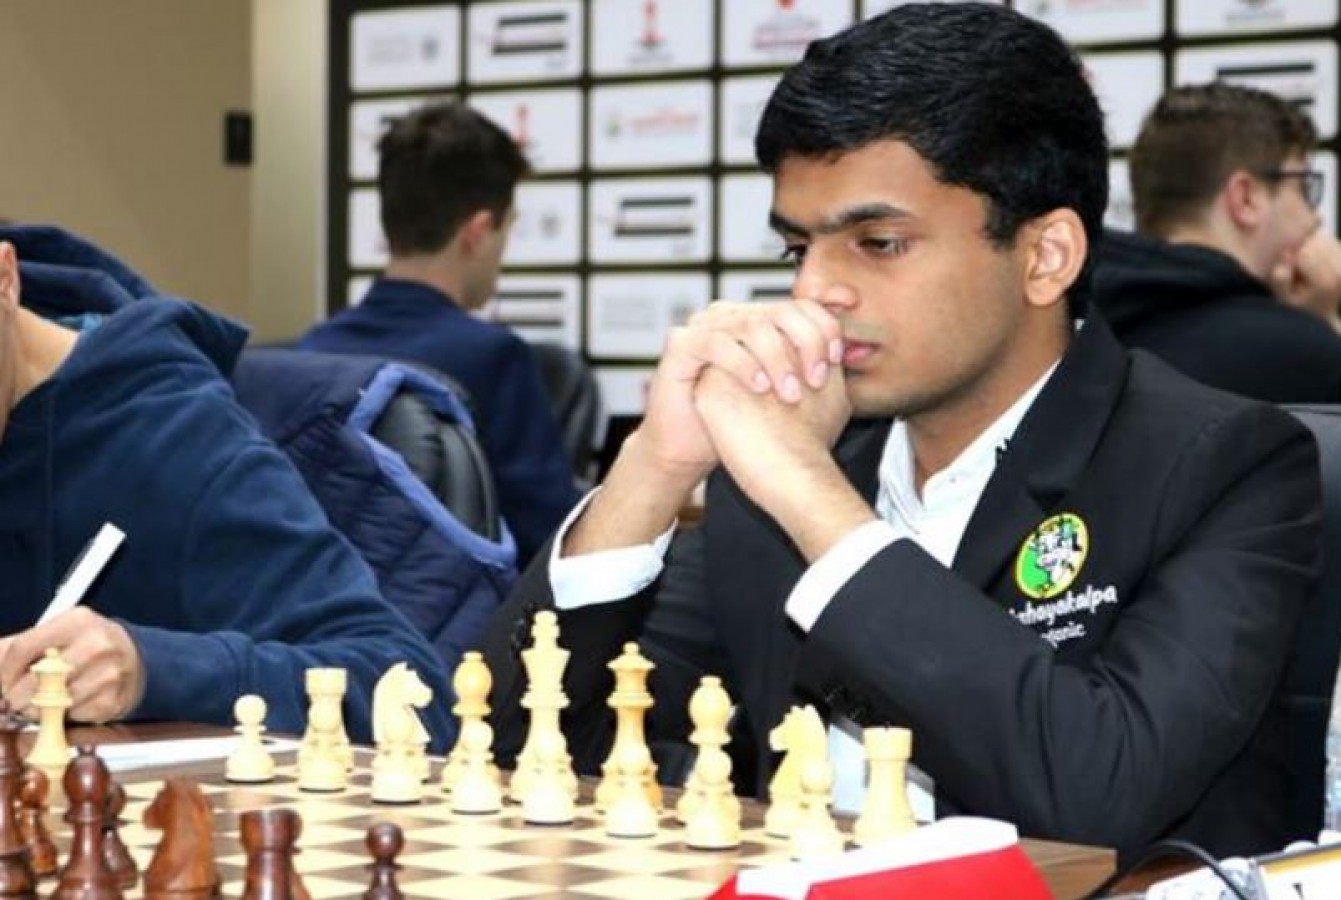 6th Sharjah Masters International Chess Championship 2023